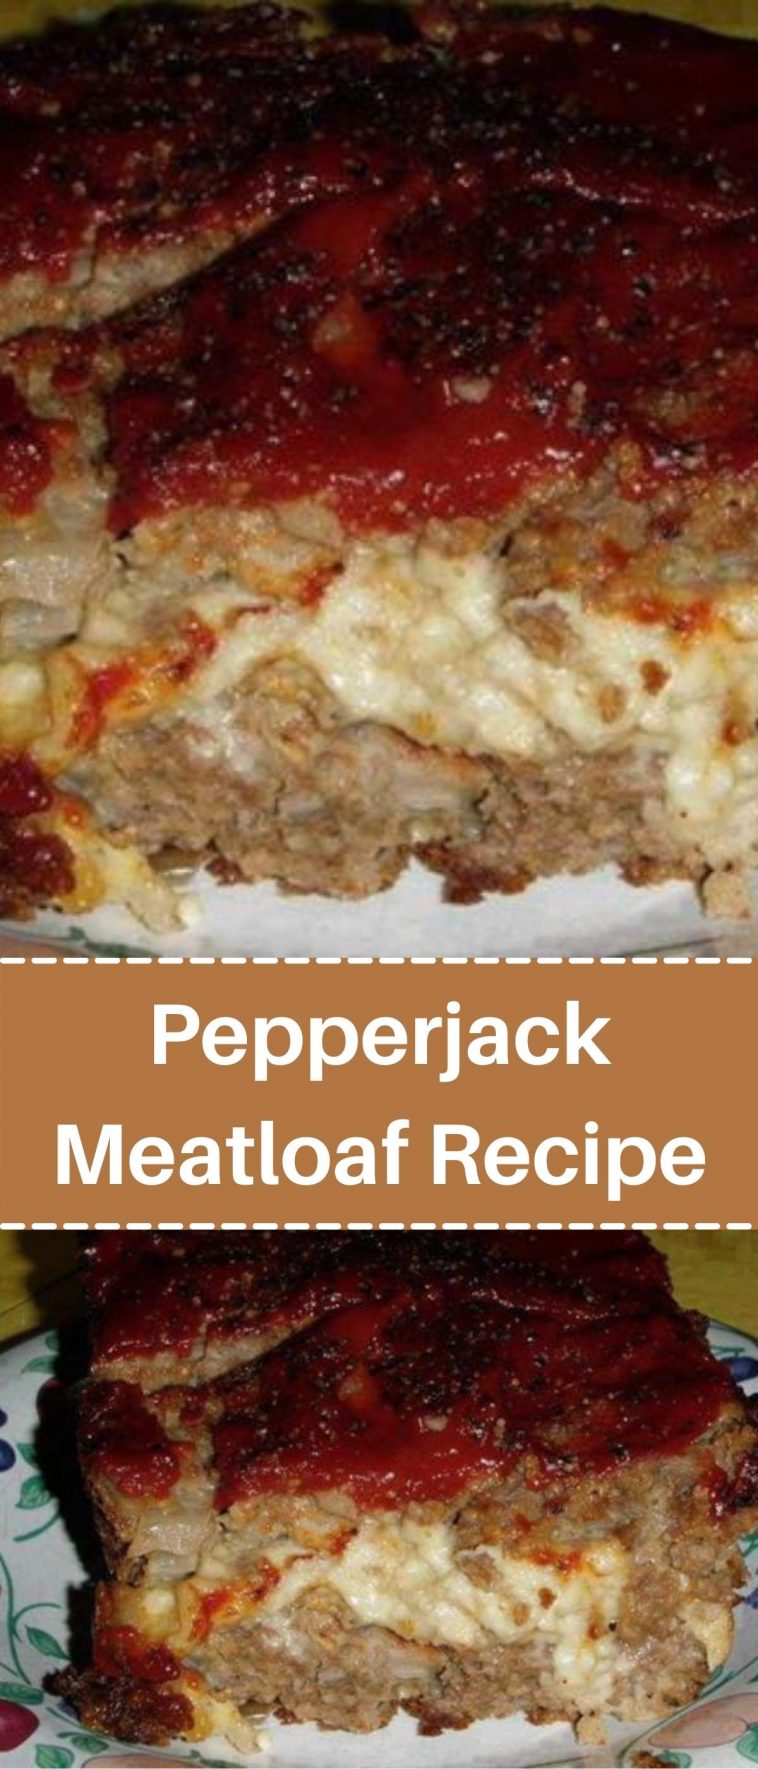 Pepperjack Meatloaf Recipe